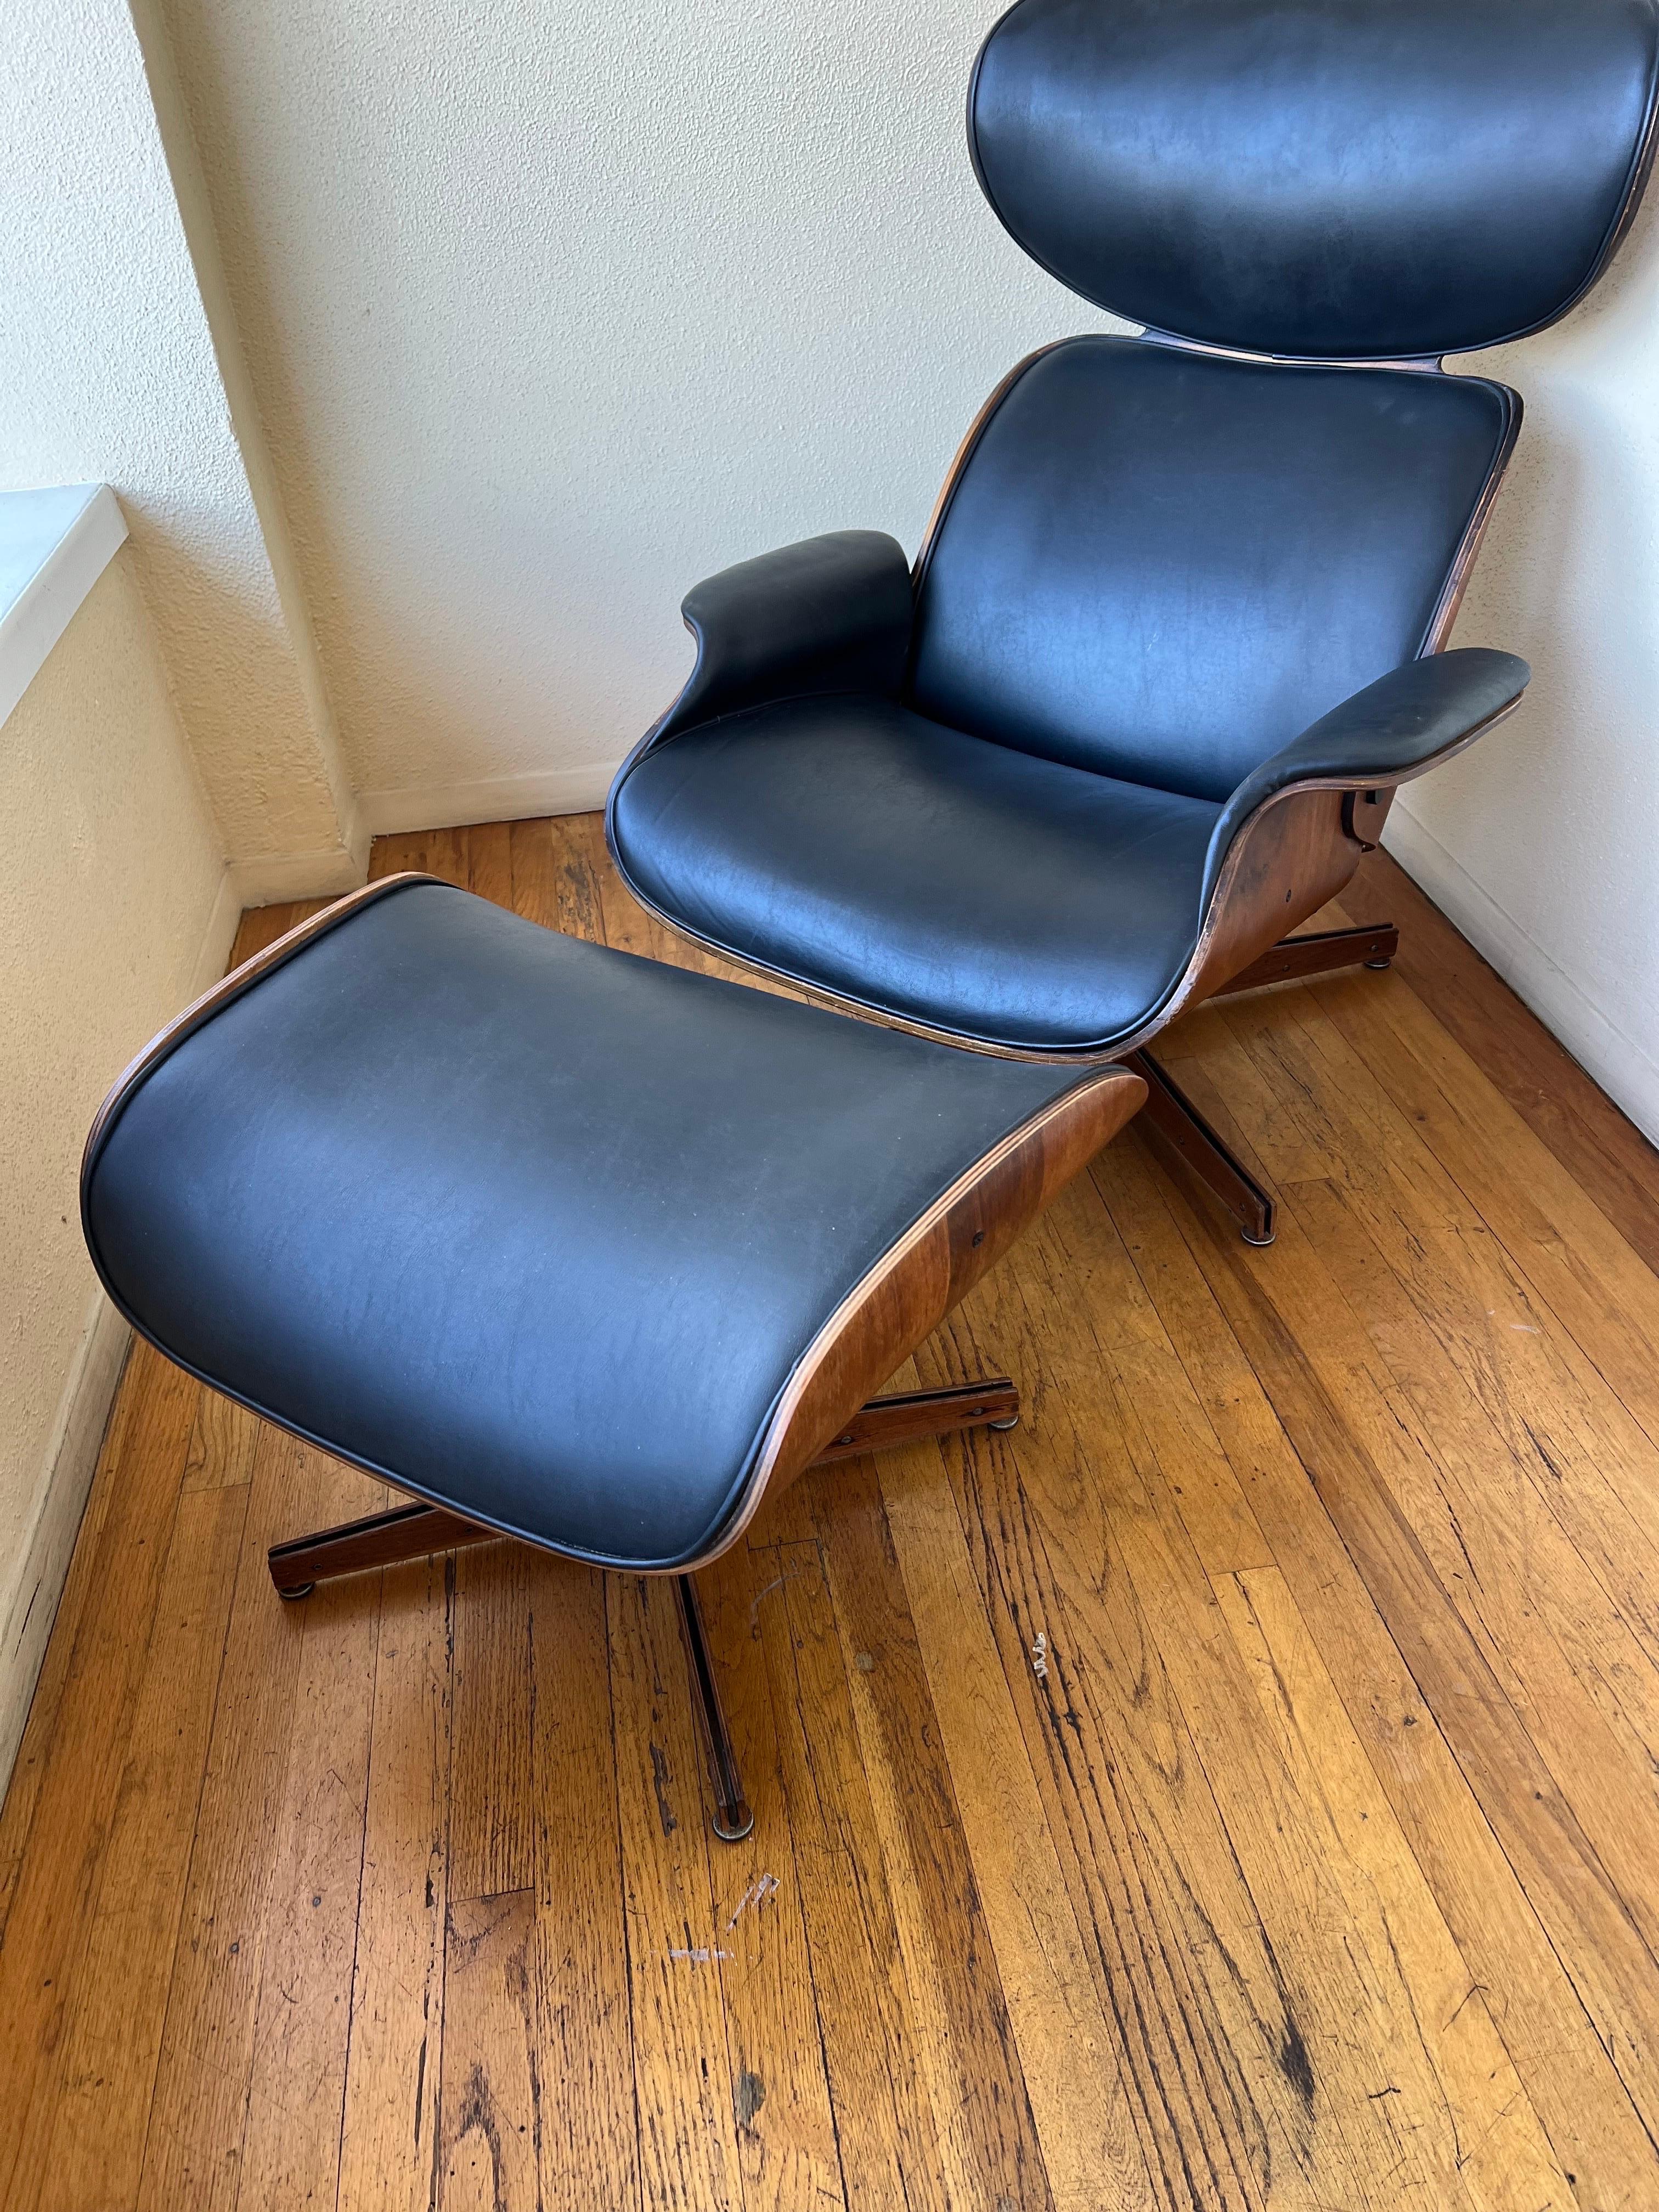 American Mid-Century Modern Walnut Chair & Ottoman by Plycraft 1